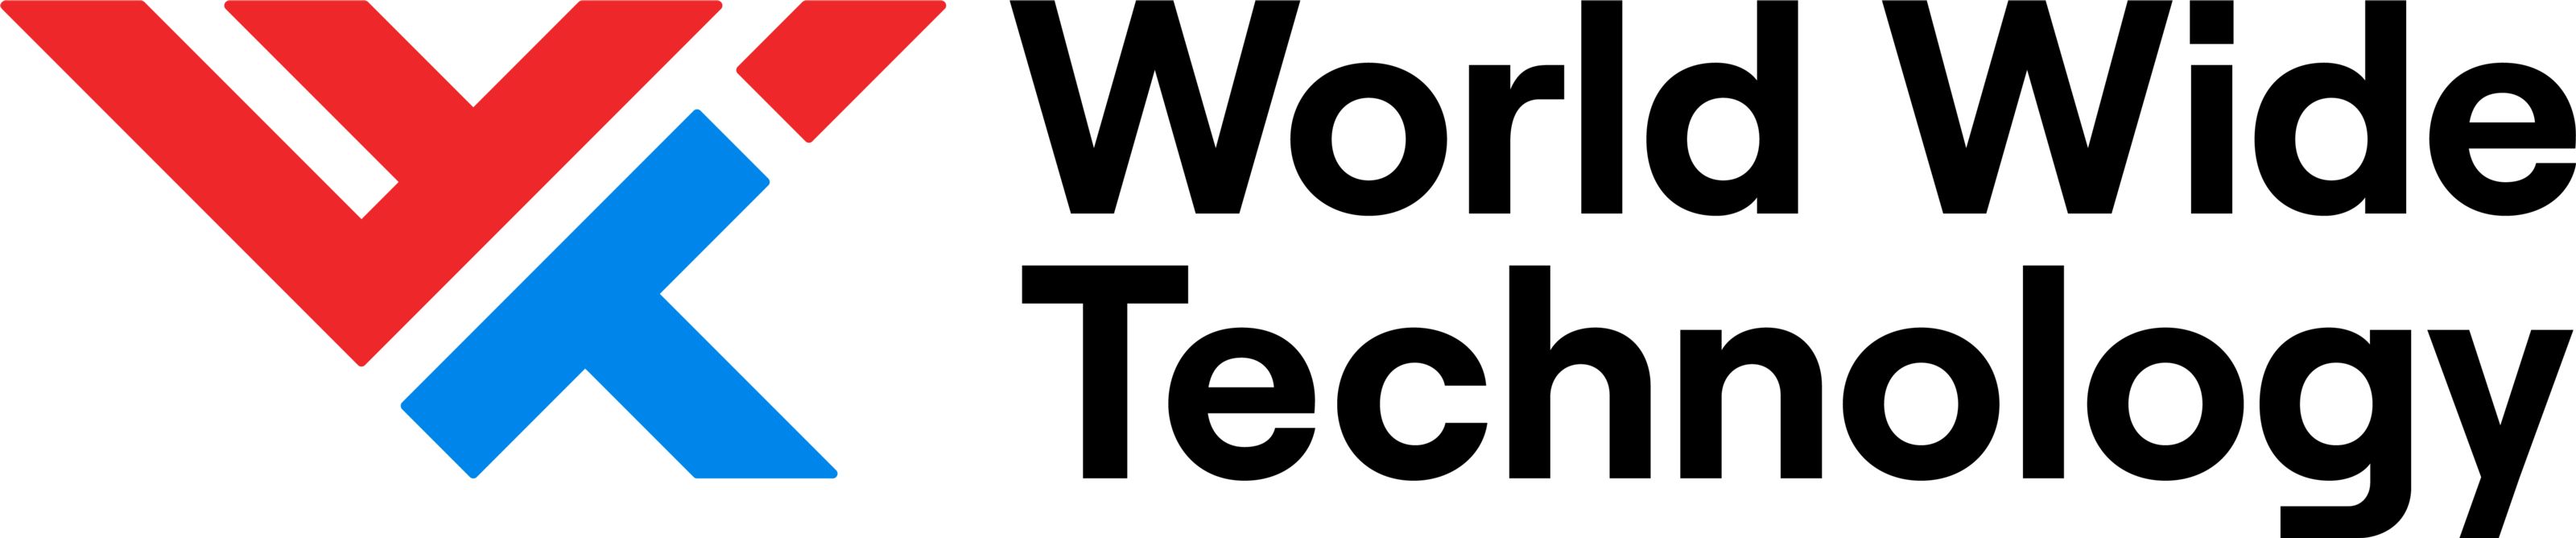 World Wide Technology Sponsor logo